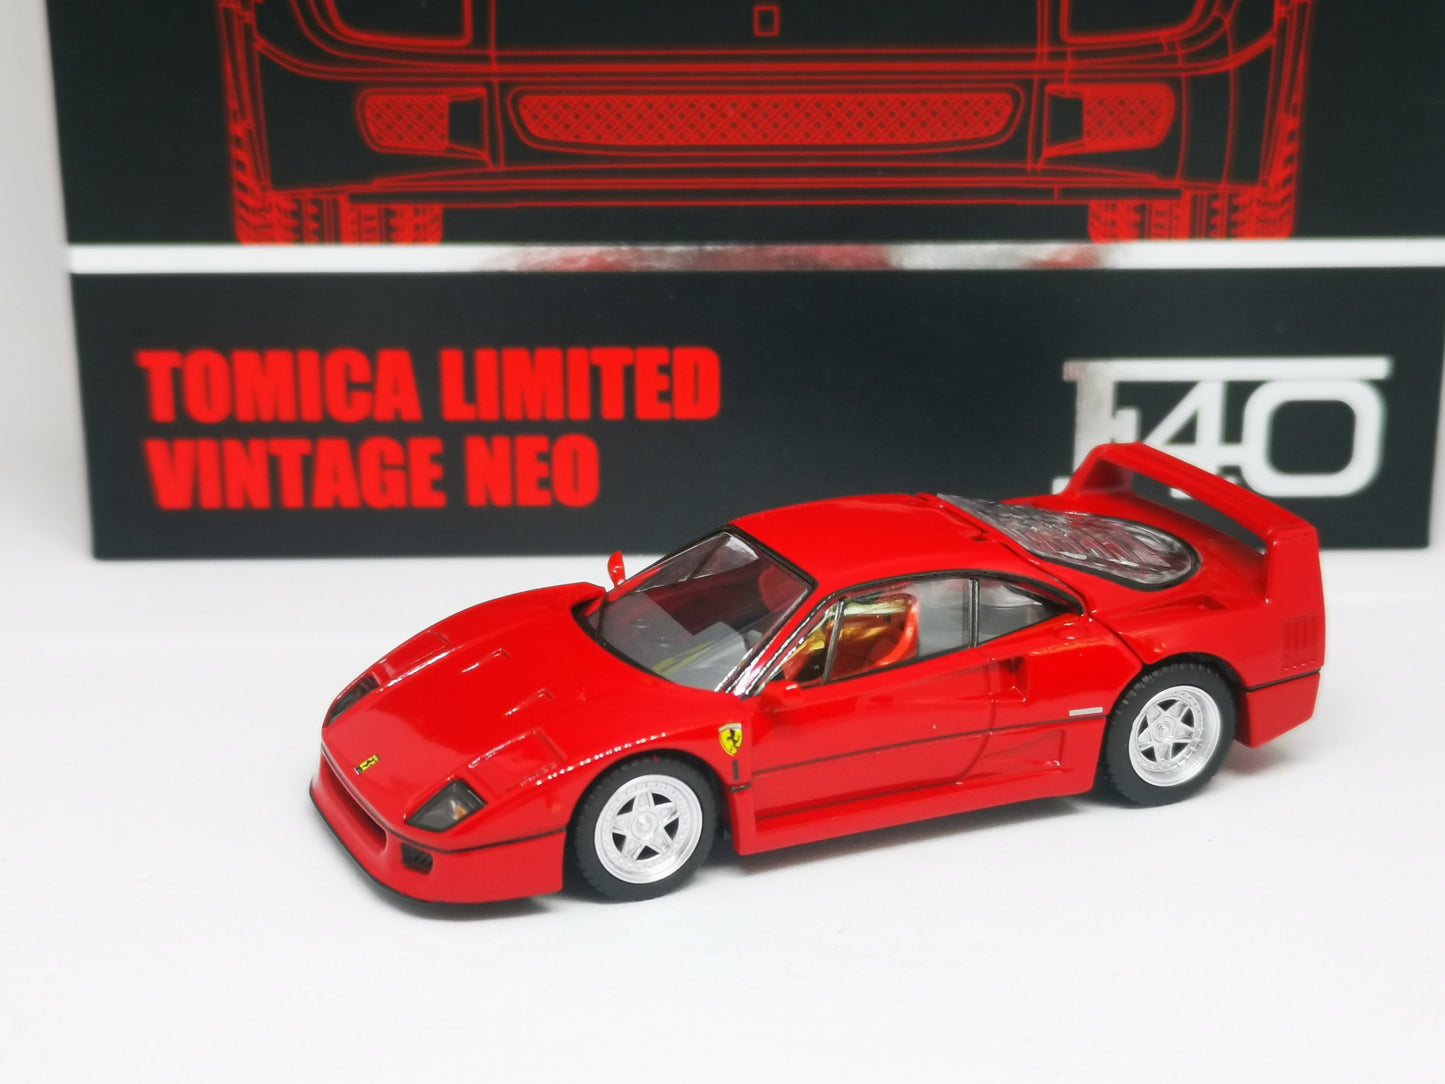 Tomica Limited Vintage Neo Ferrari F40 (Red)